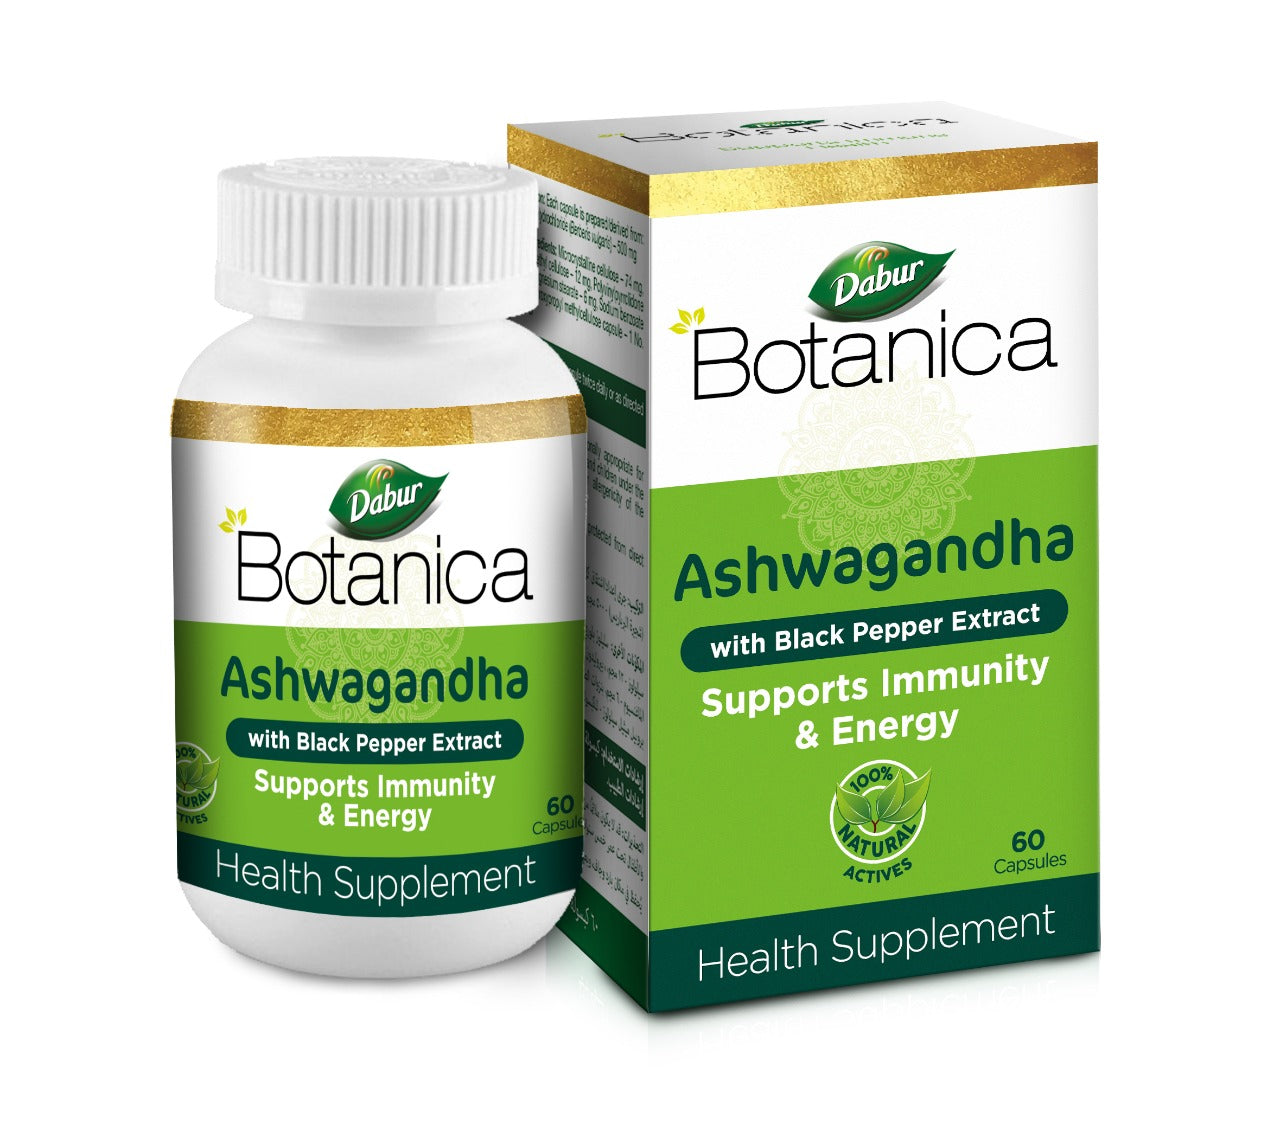 Dabur Botanica Ashwagandha with Black Pepper Extract 125gm Powder